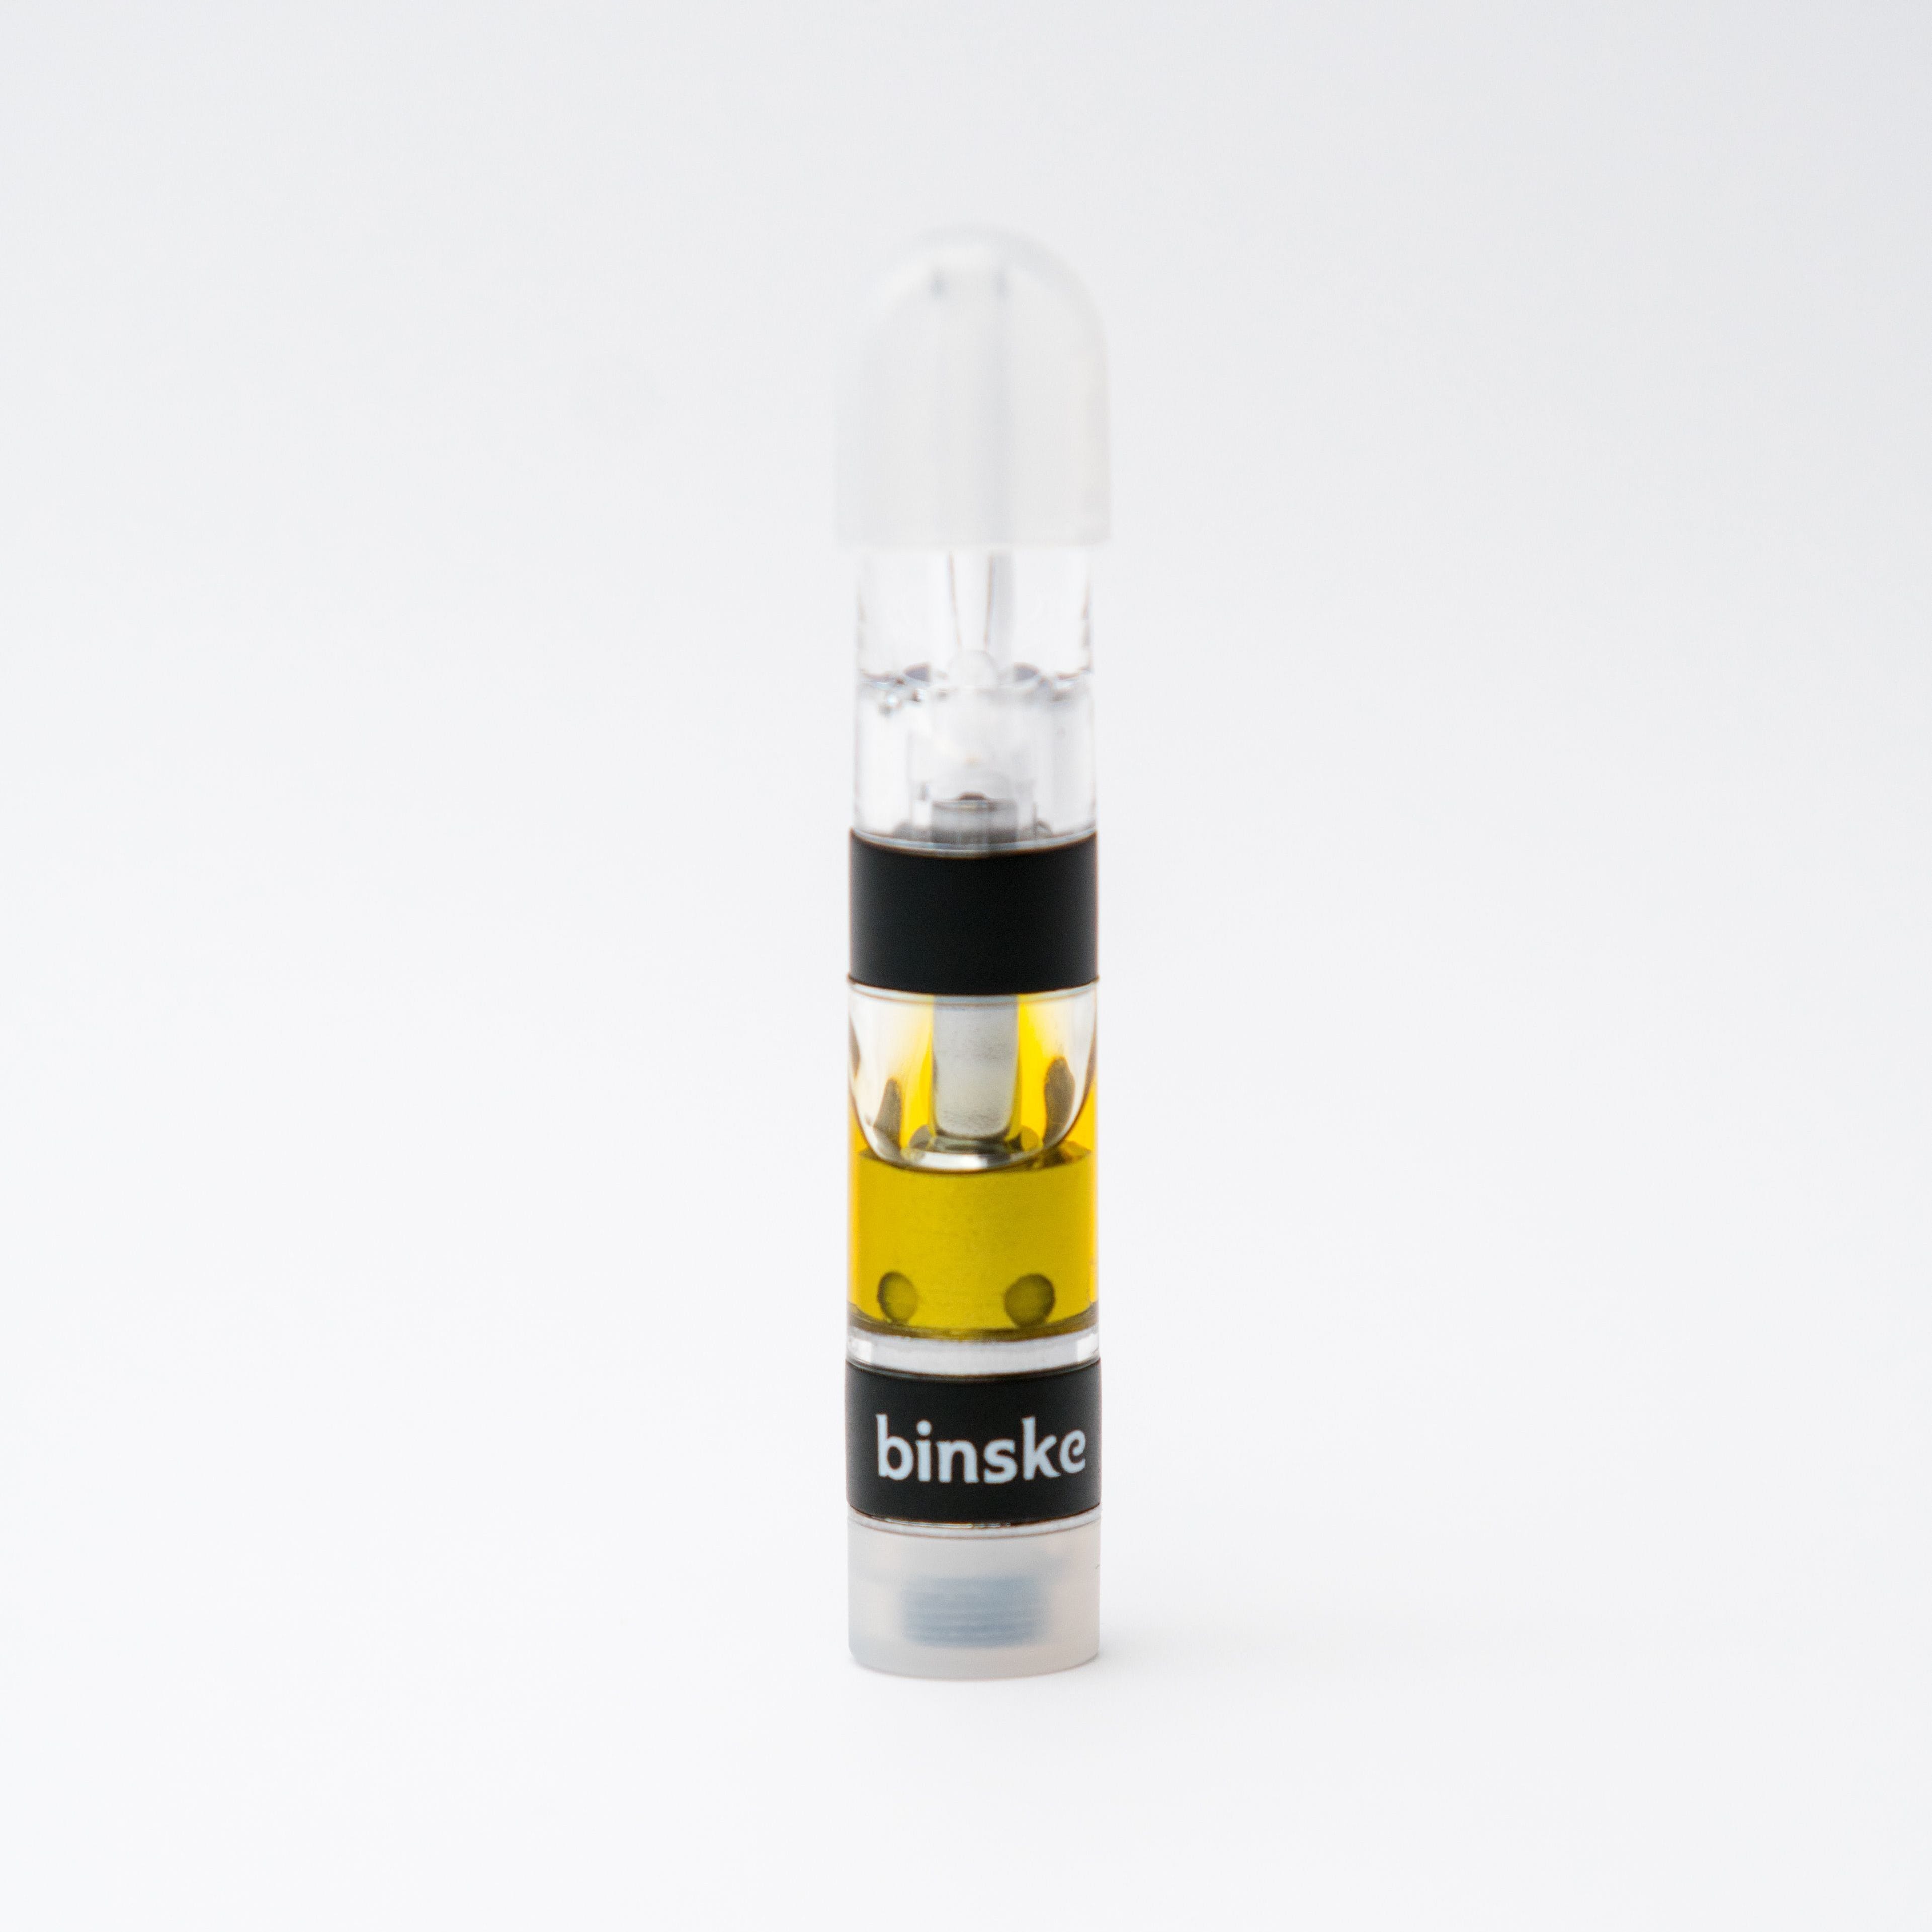 concentrate-binske-live-resin-cartridge